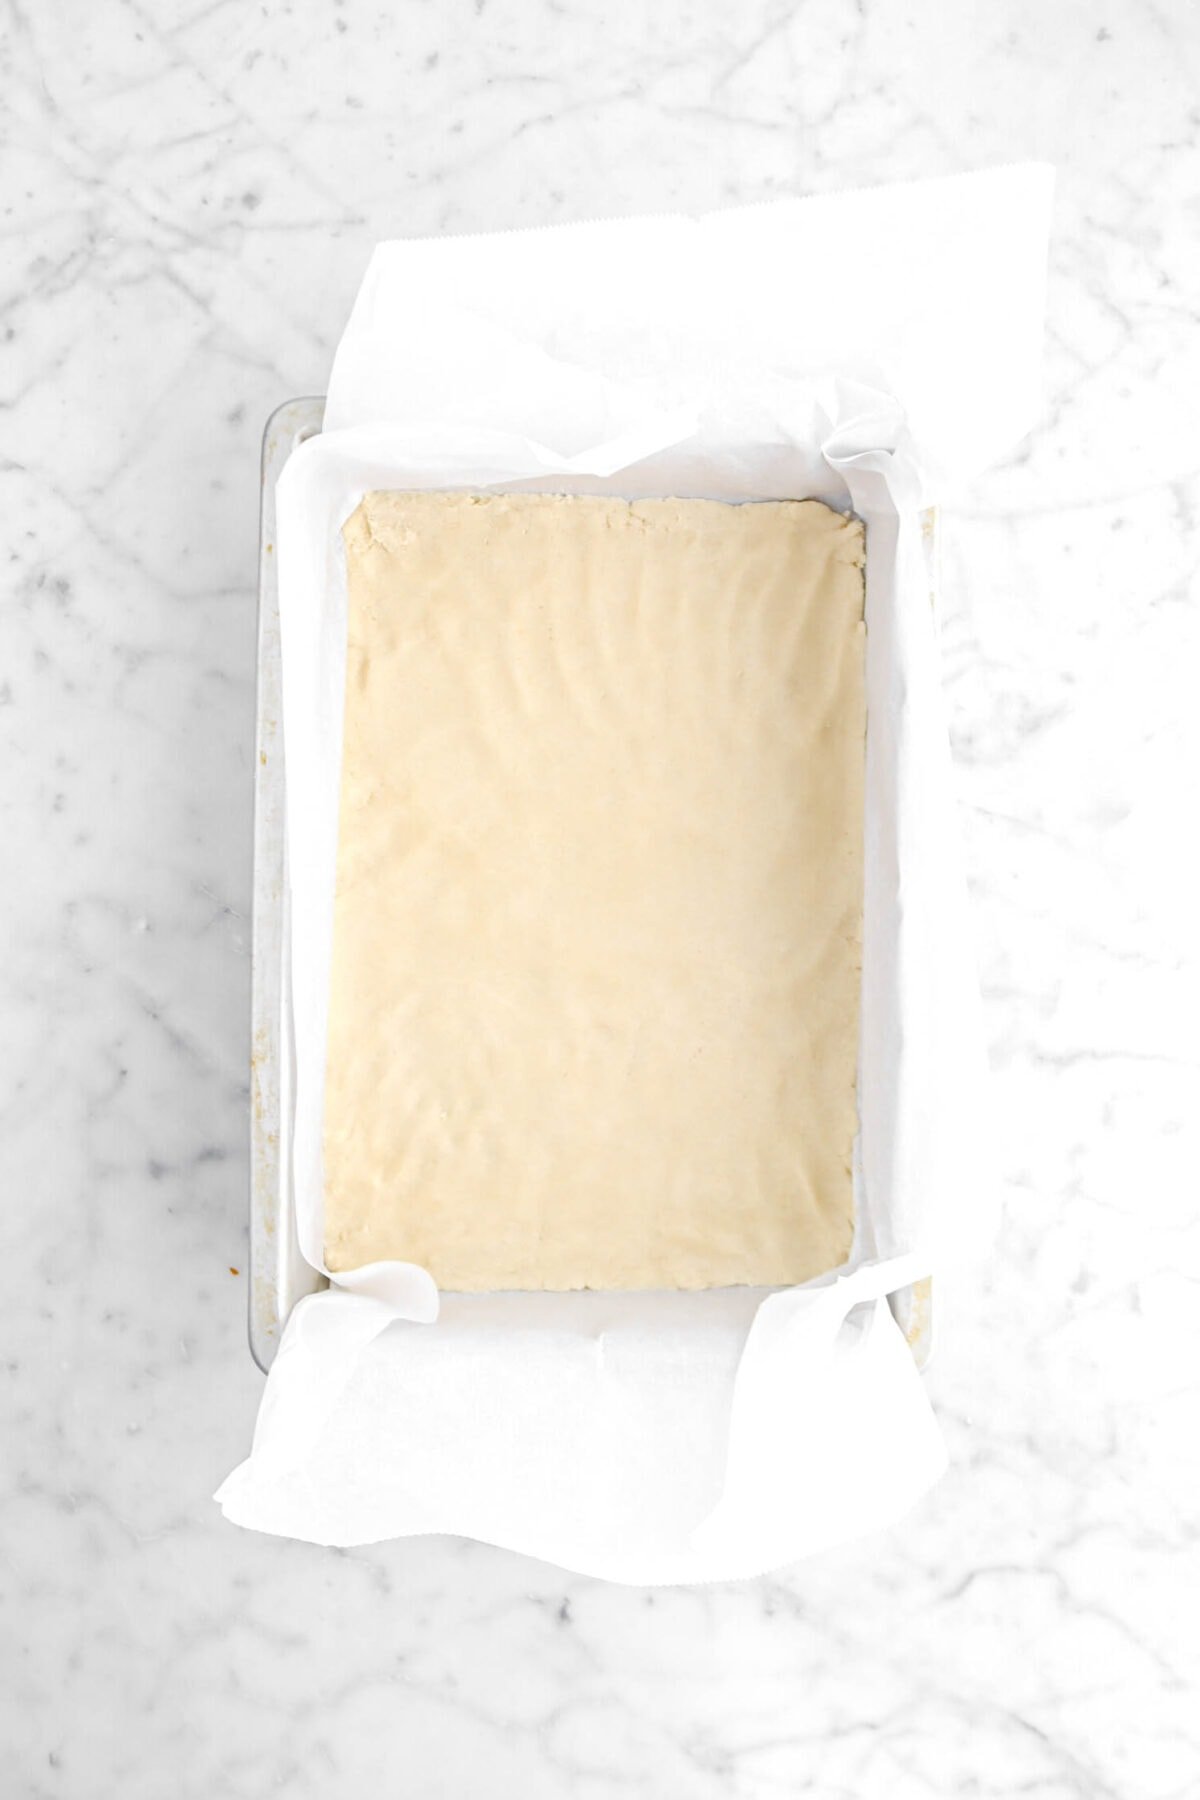 flattened shortbread dough in lined pan